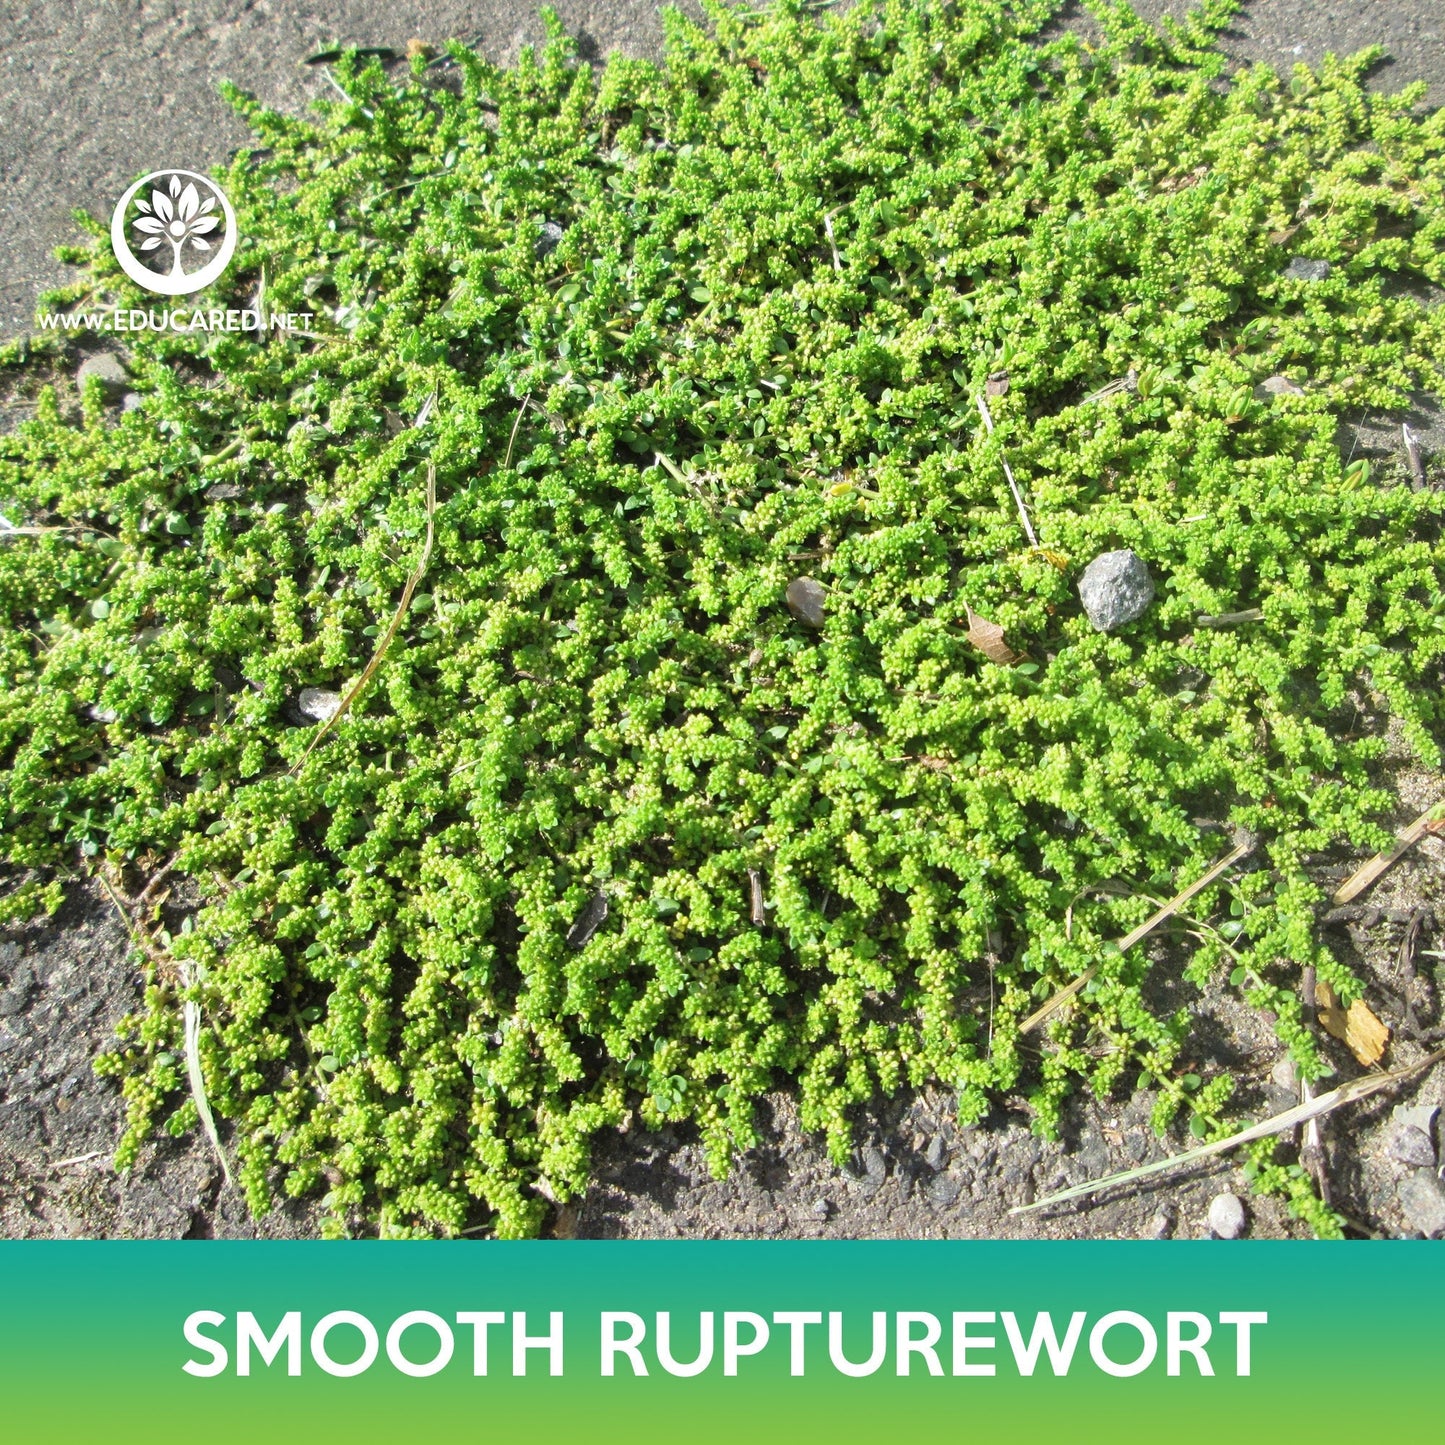 Smooth Rupturewort Groundcover Seeds, Green Carpet, Herniaria Glabra